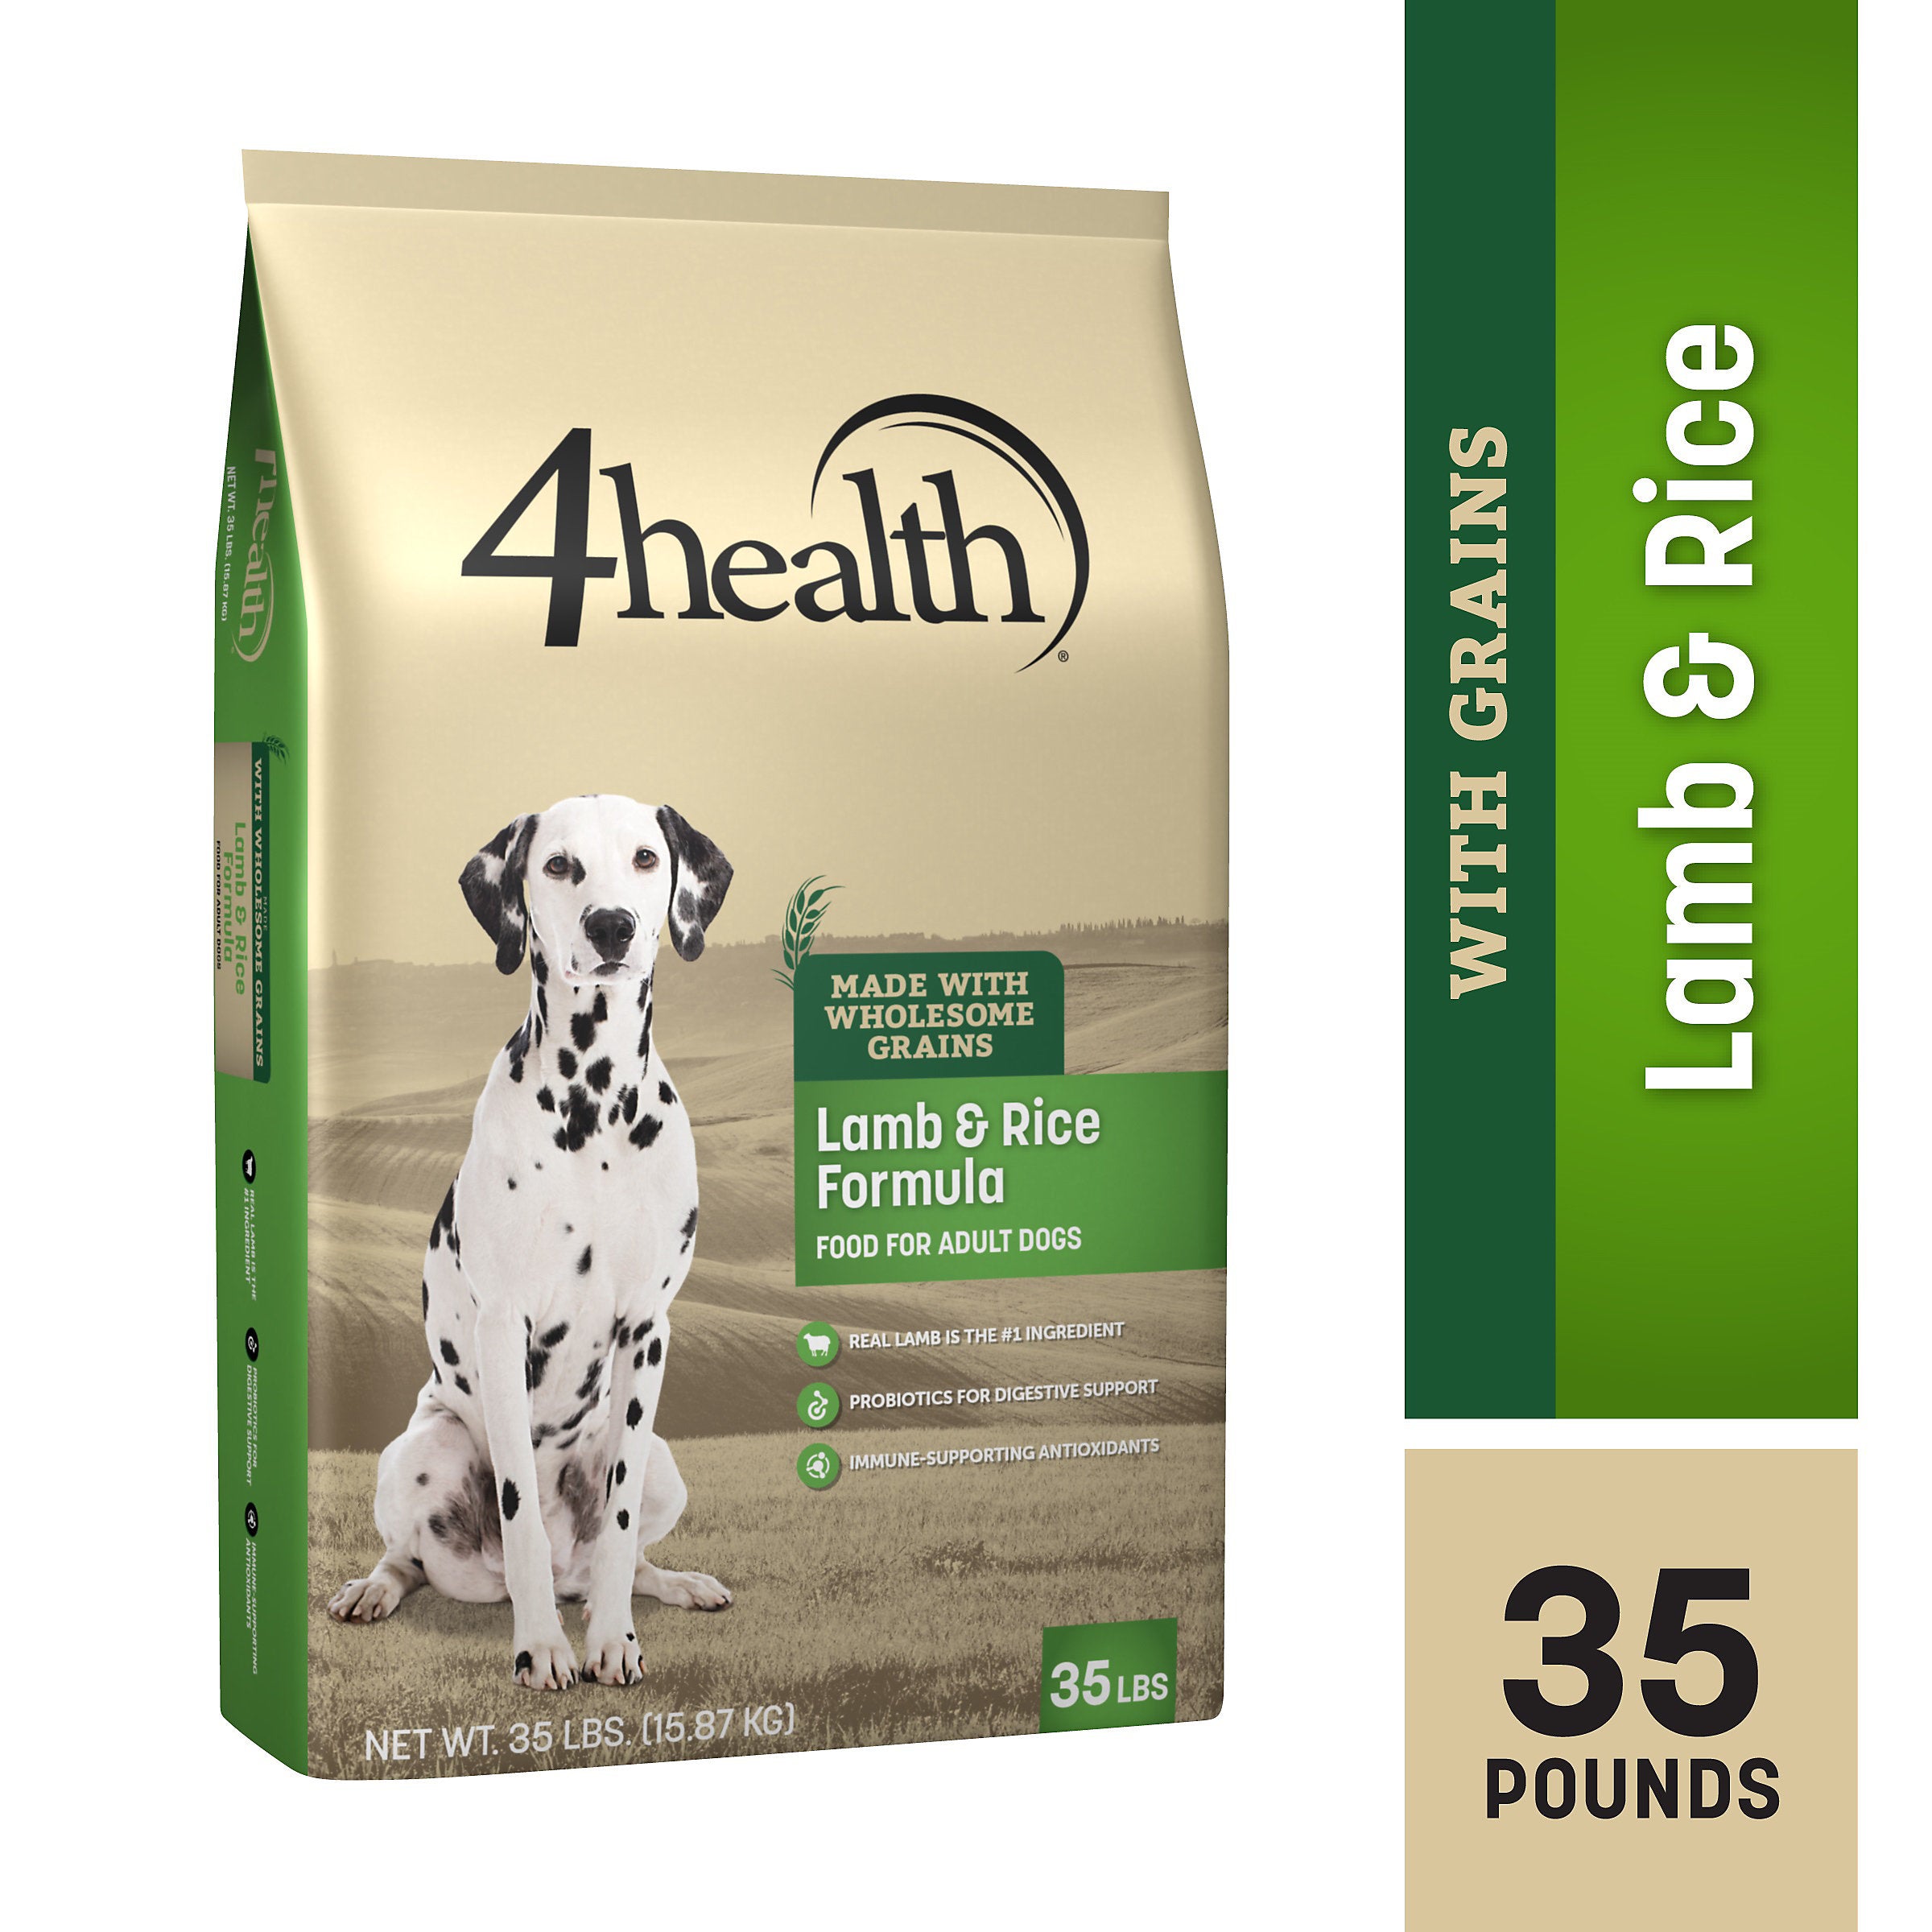 4 health pet food